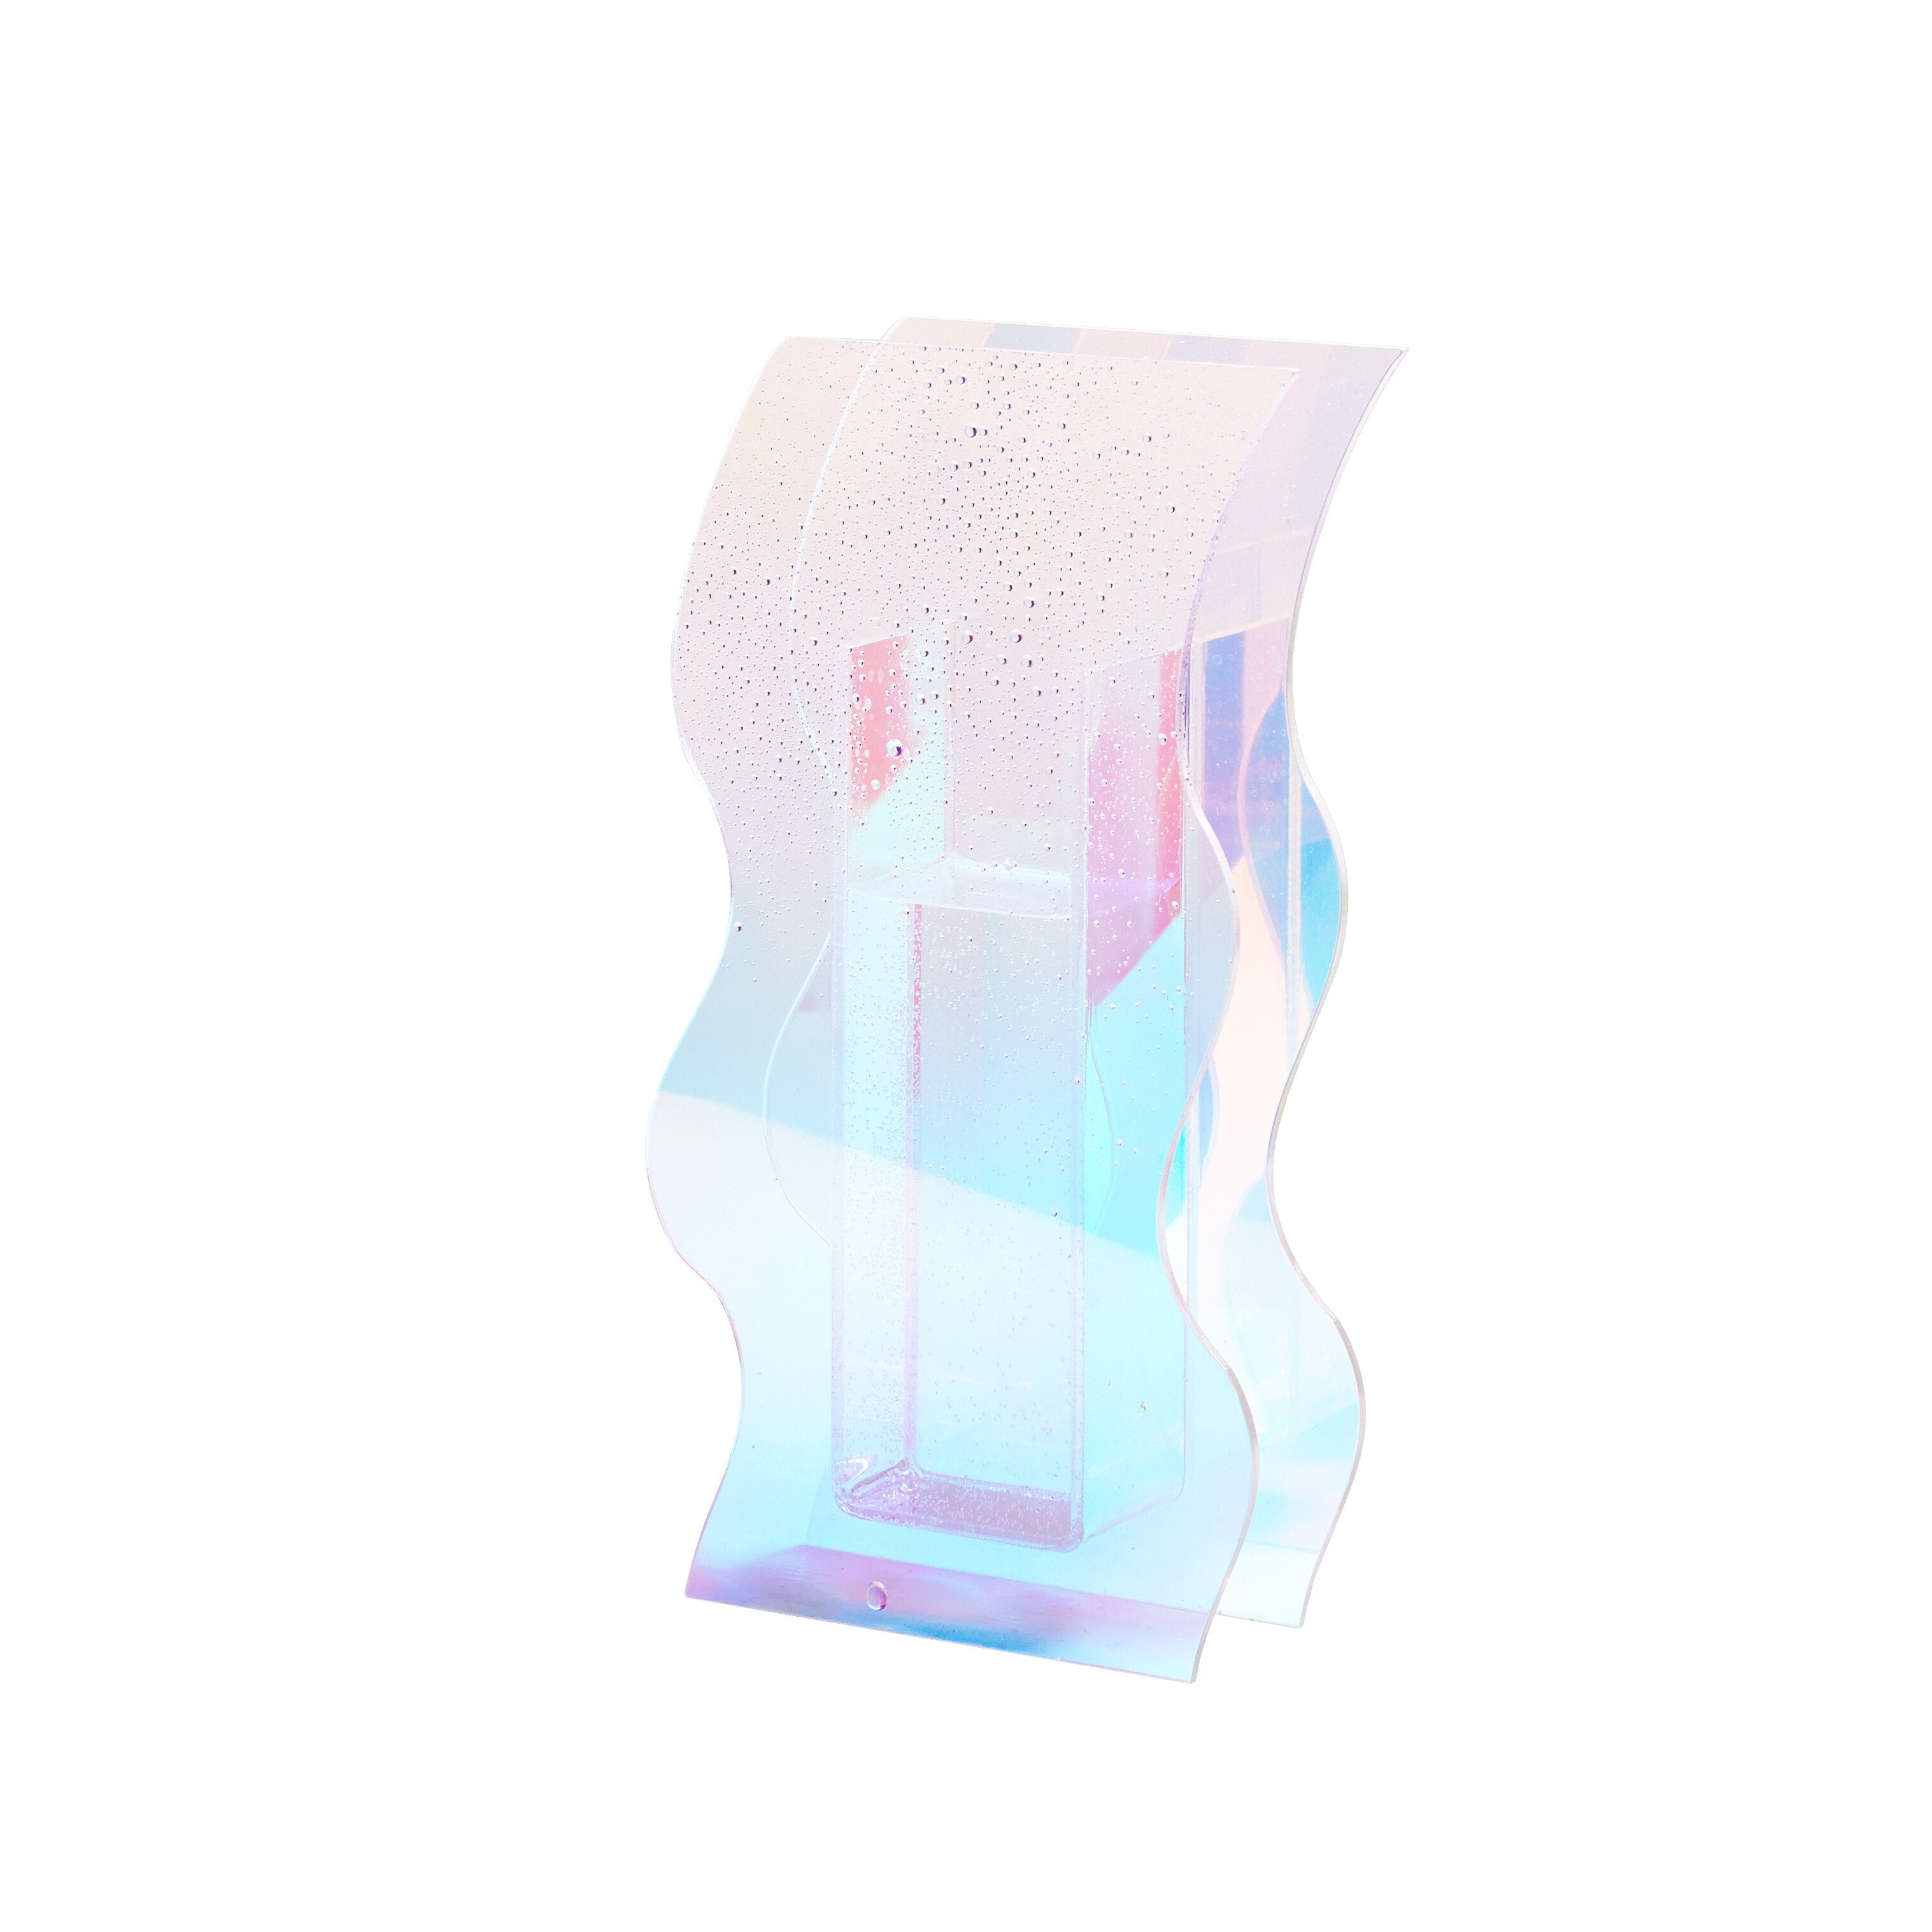 Prism Acrylic Vase